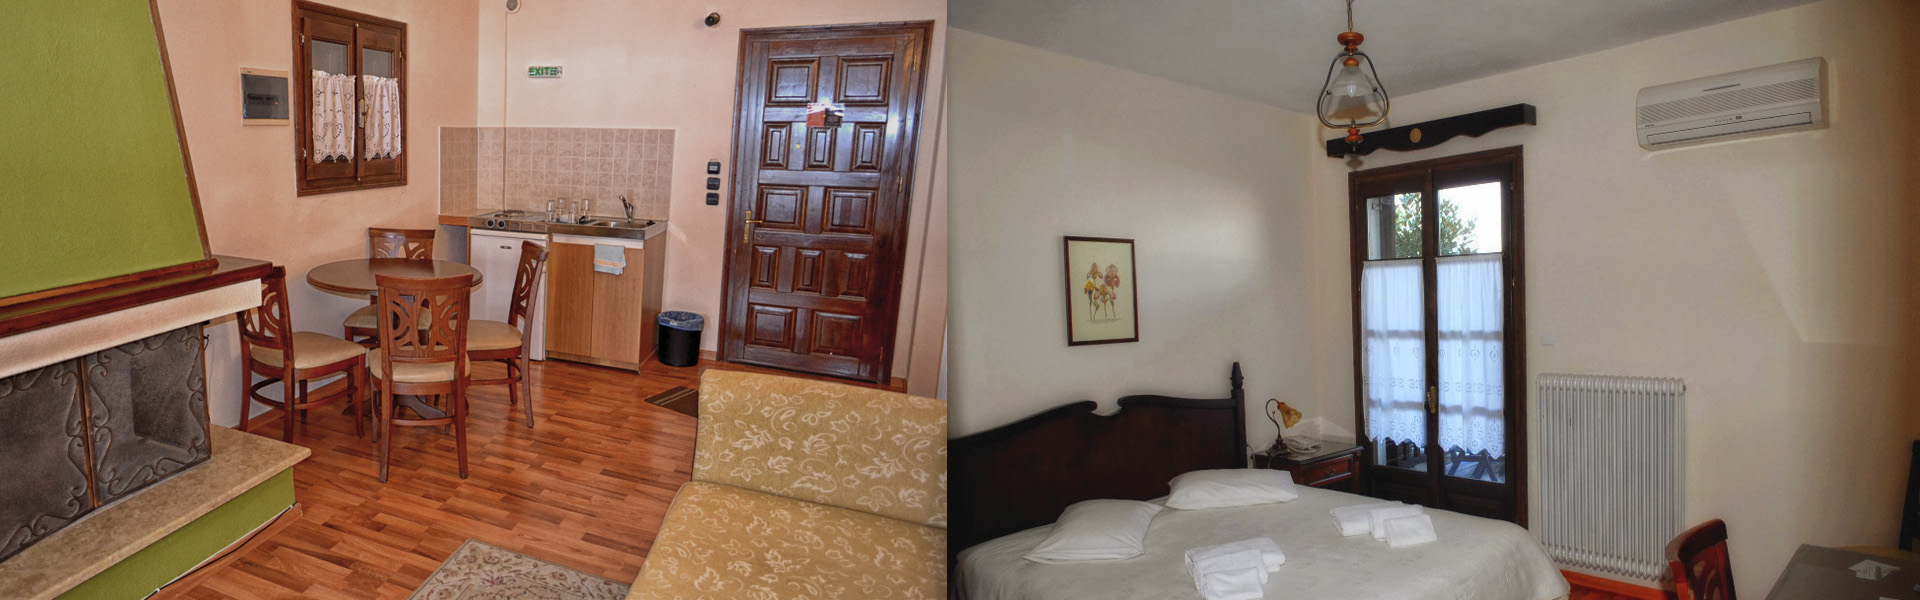 pelion aglaida hotel two spaces room